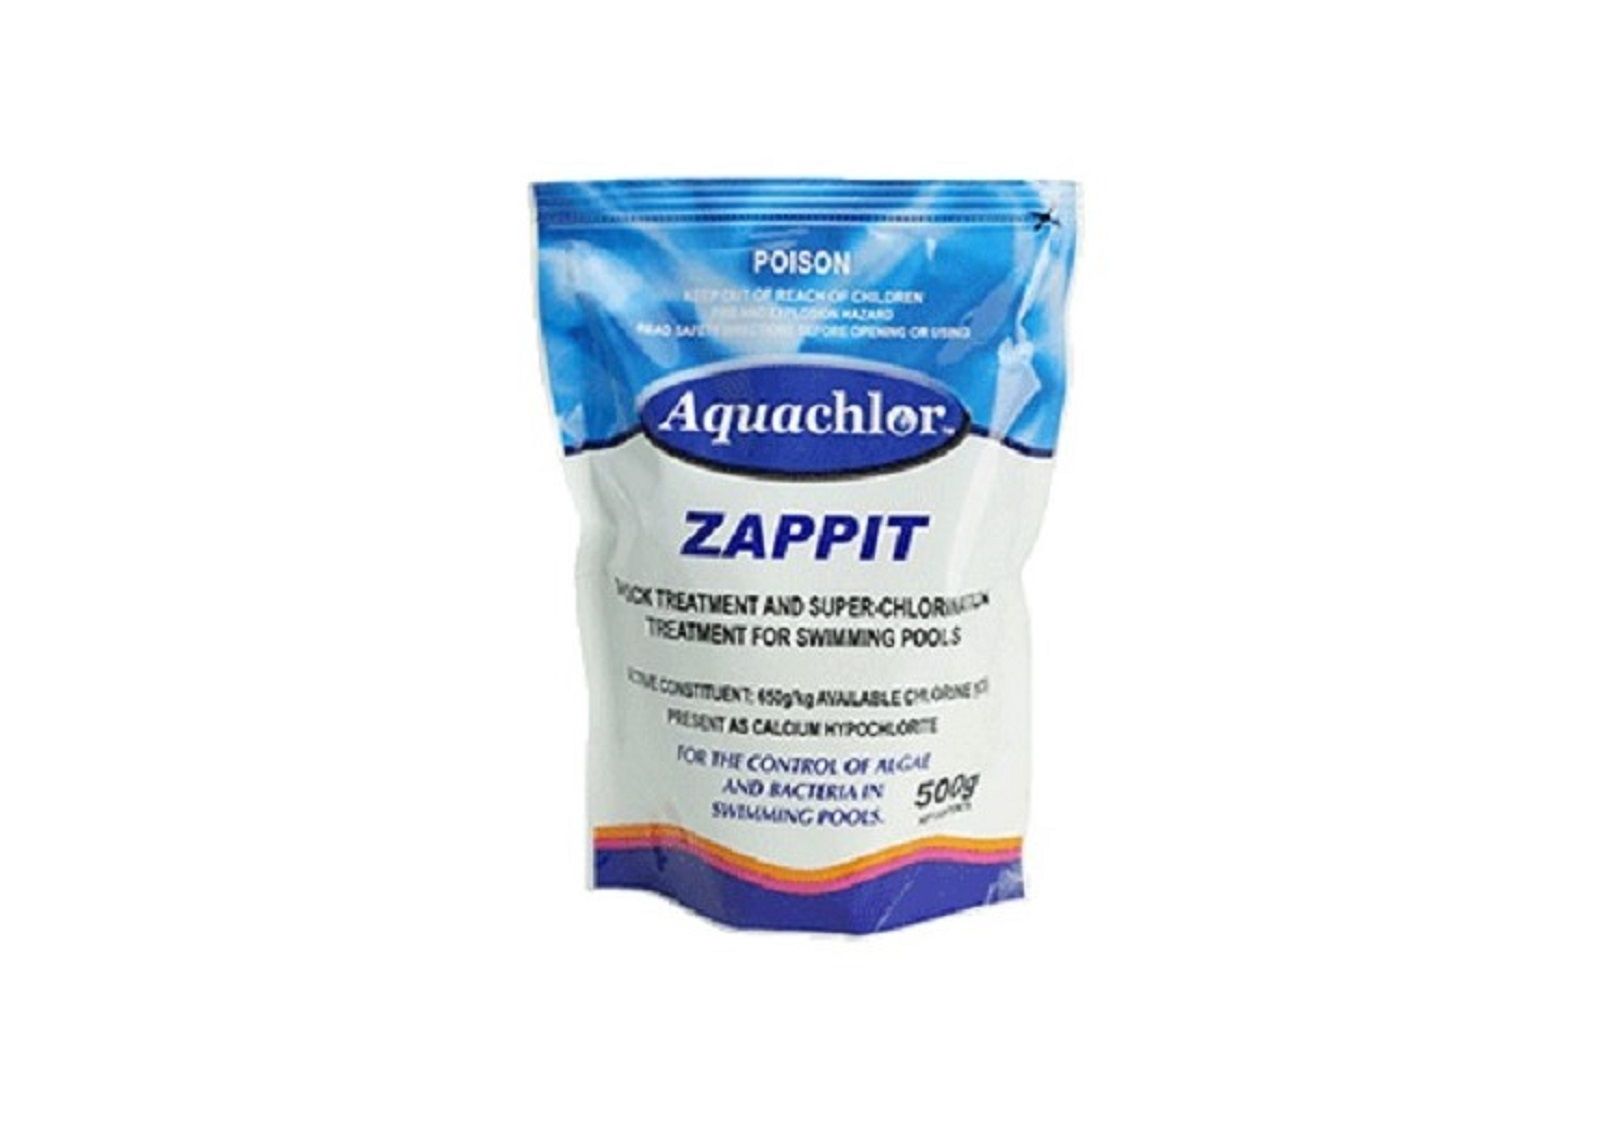 Aquachlor Pool Zappit 500g Oxidiser Shock